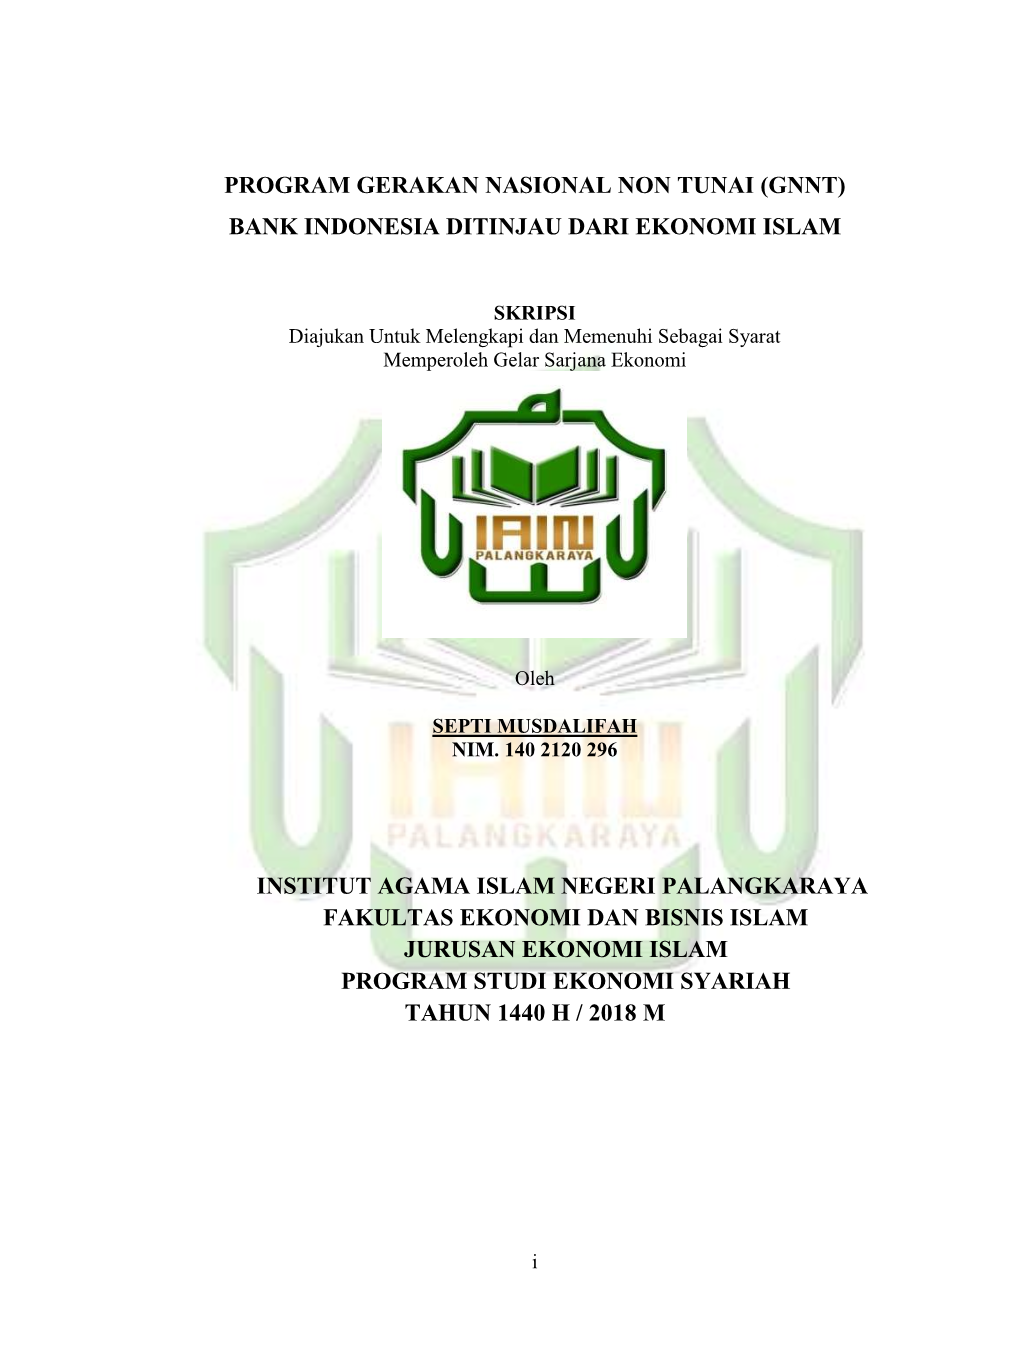 Program Gerakan Nasional Non Tunai (Gnnt) Bank Indonesia Ditinjau Dari Ekonomi Islam